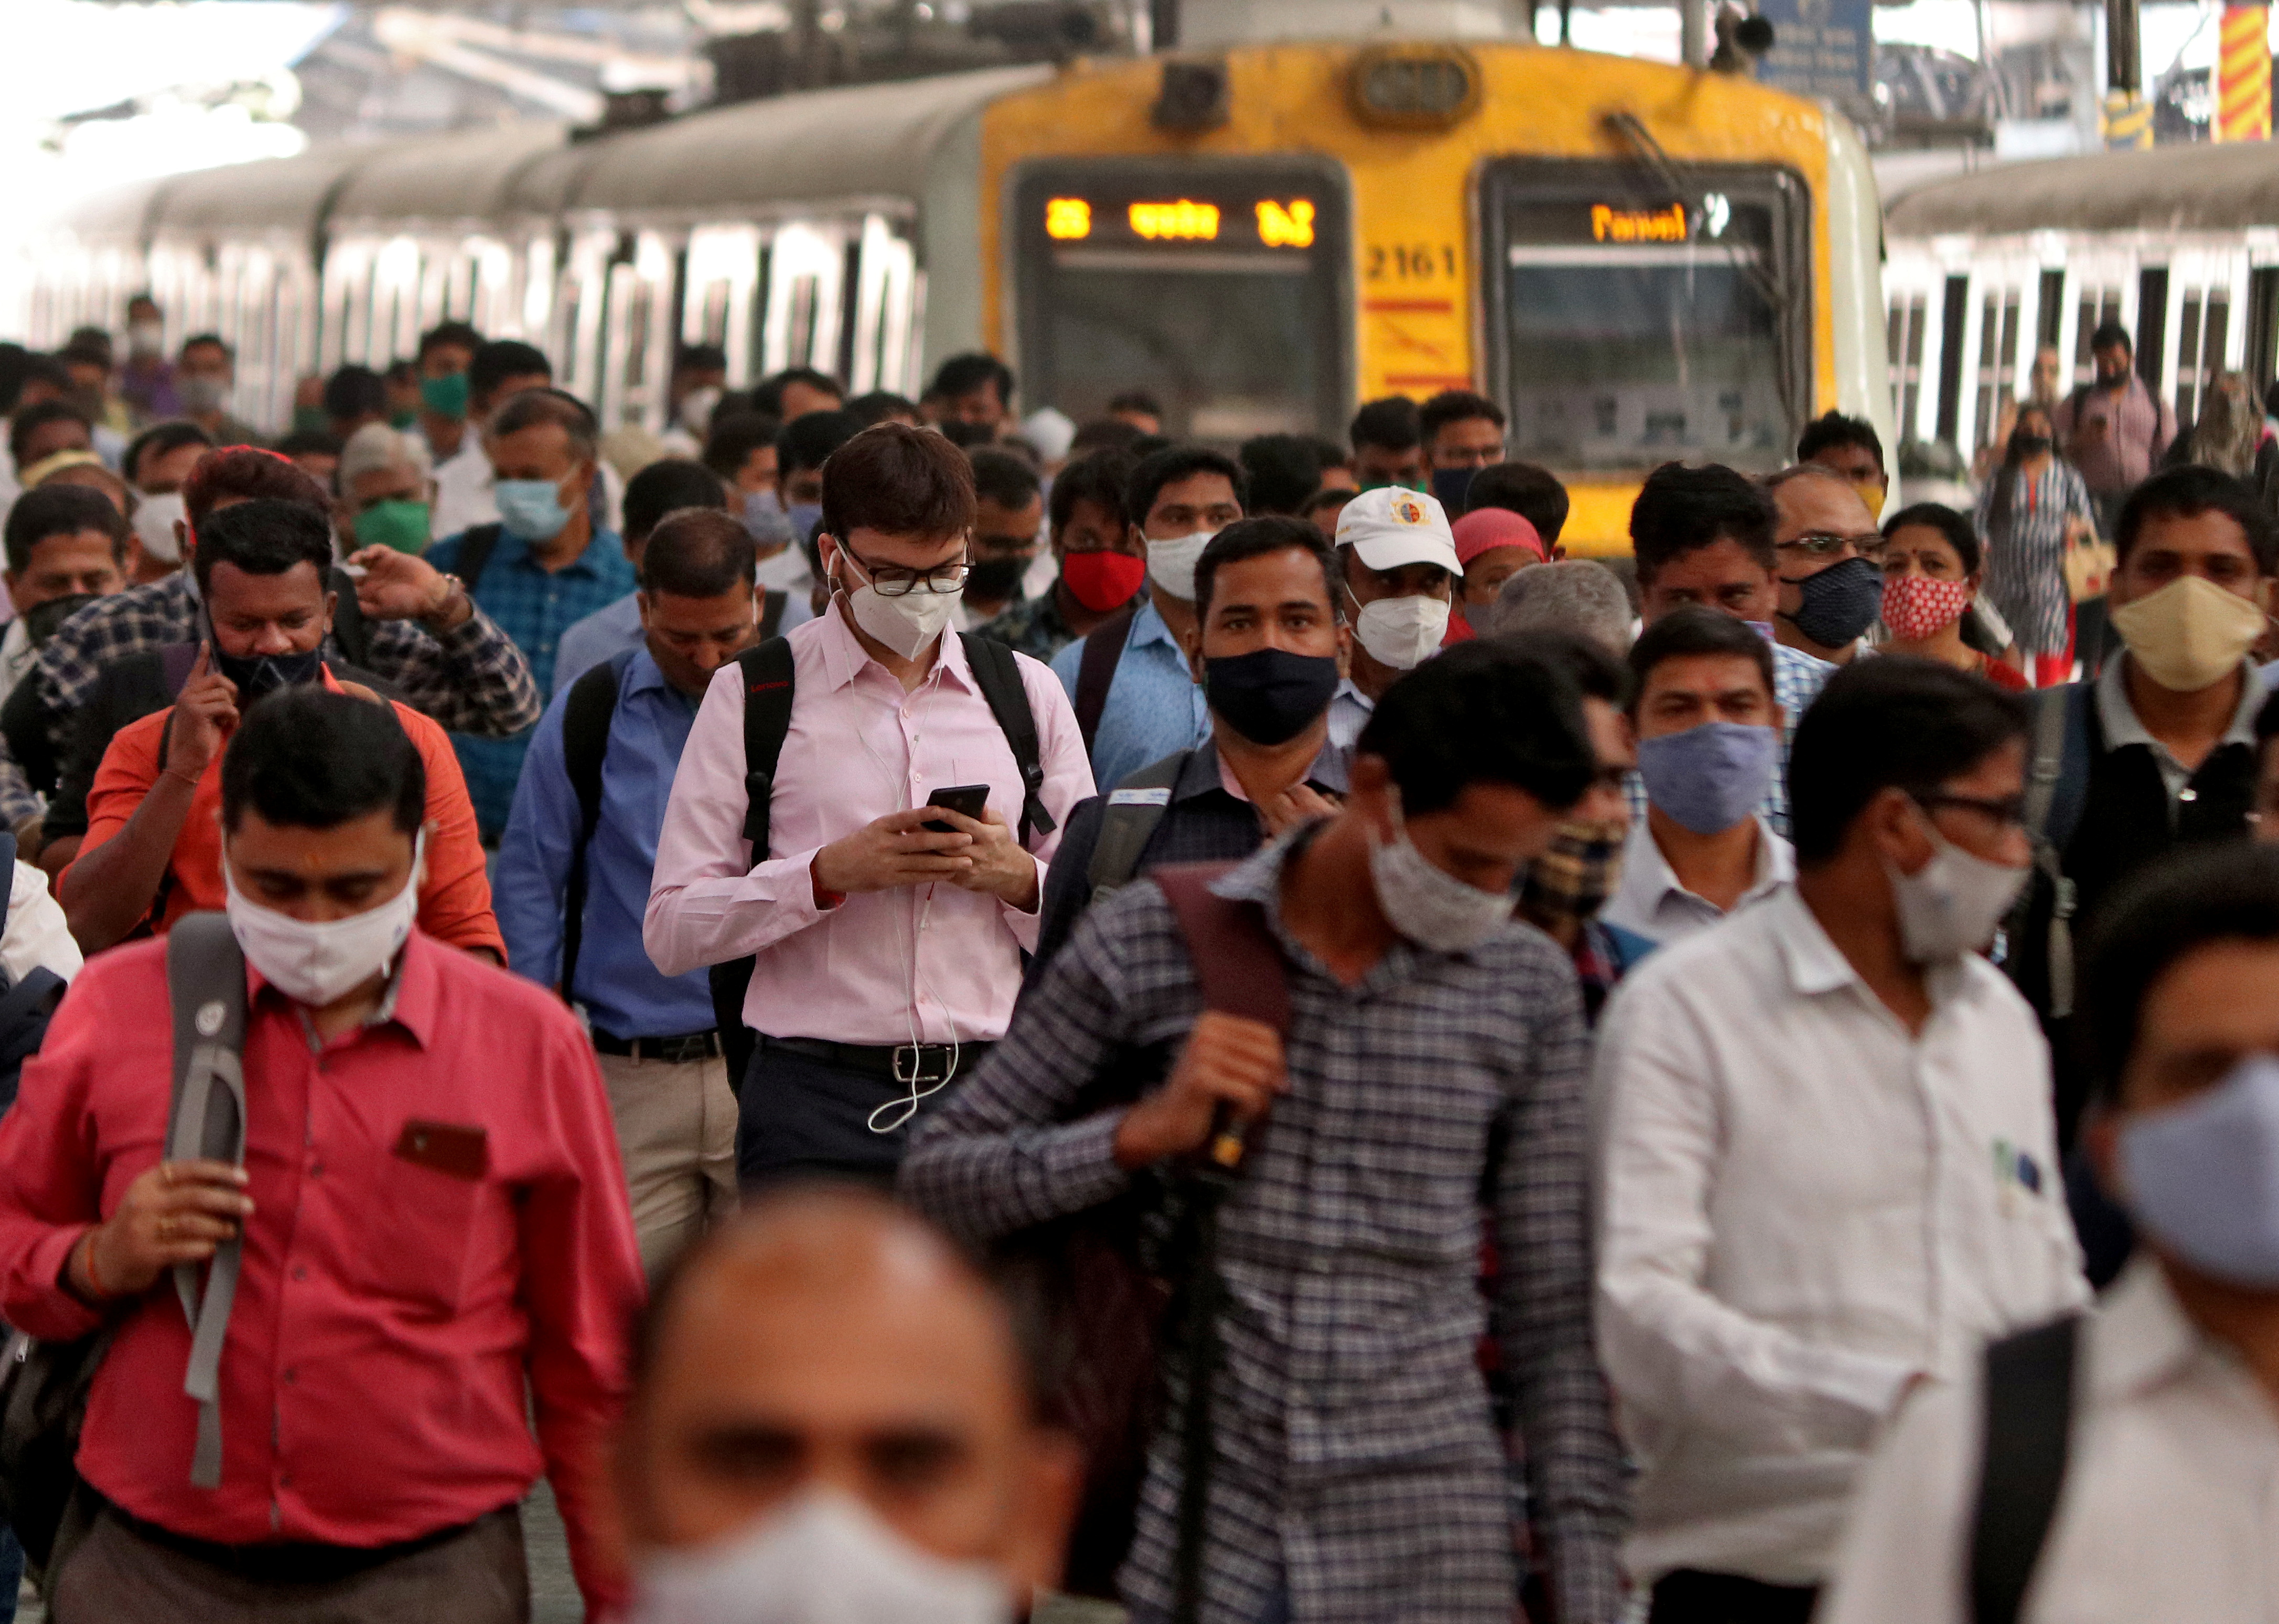 People wearing protective masks walk on a platform at the Chhatrapati Shivaji Terminus railway station, amidst the spread of the coronavirus disease (COVID-19), in Mumbai, India, March 16, 2021. REUTERS/Niharika Kulkarni